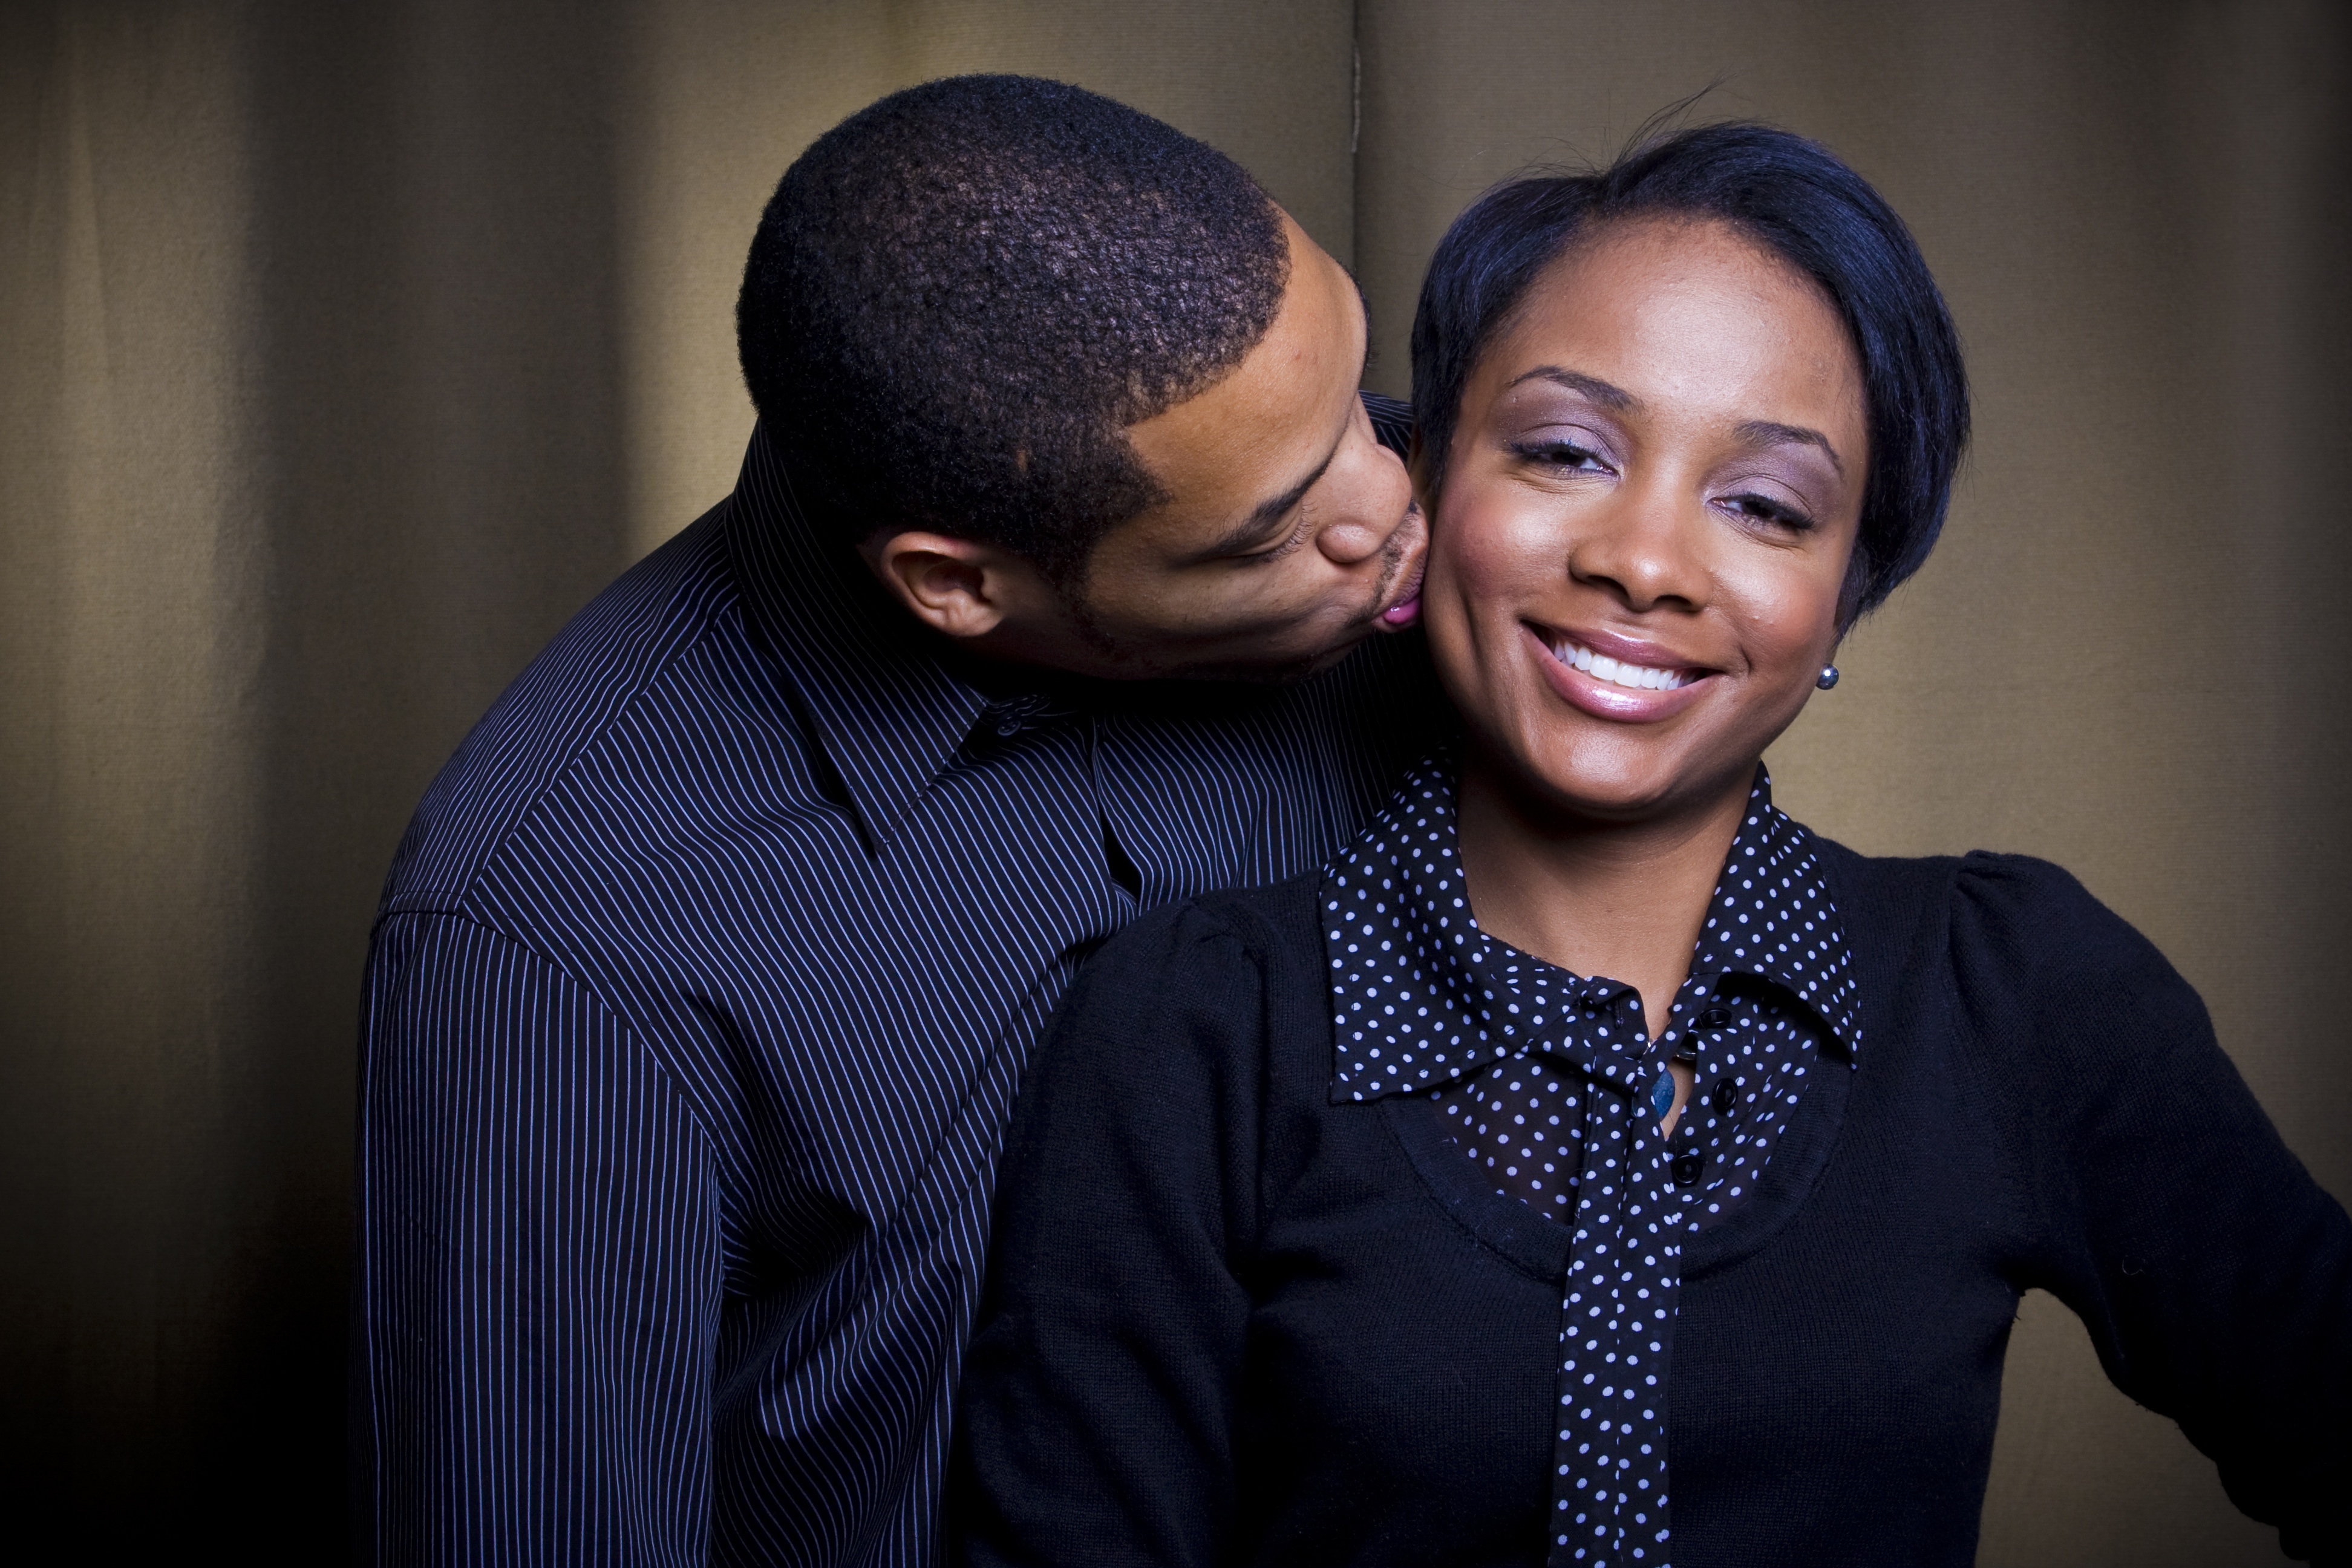 Женщины рогоносцев. Жены афроамериканцев. Негр целует в щеку. Husband. Black man and Black woman.